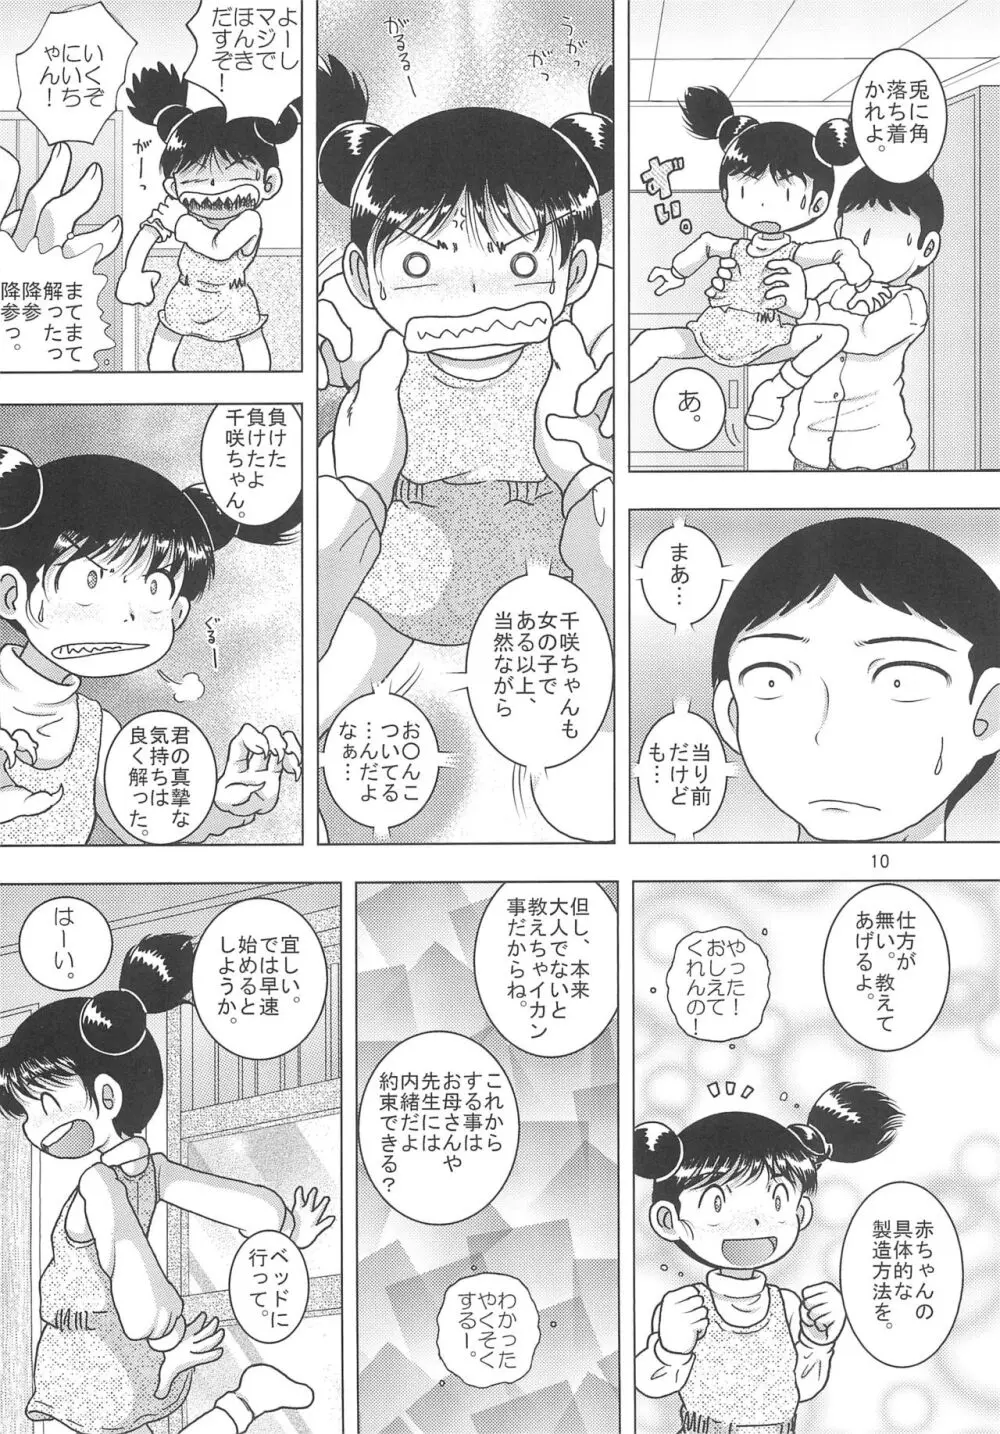 天爛幼柑 - page10